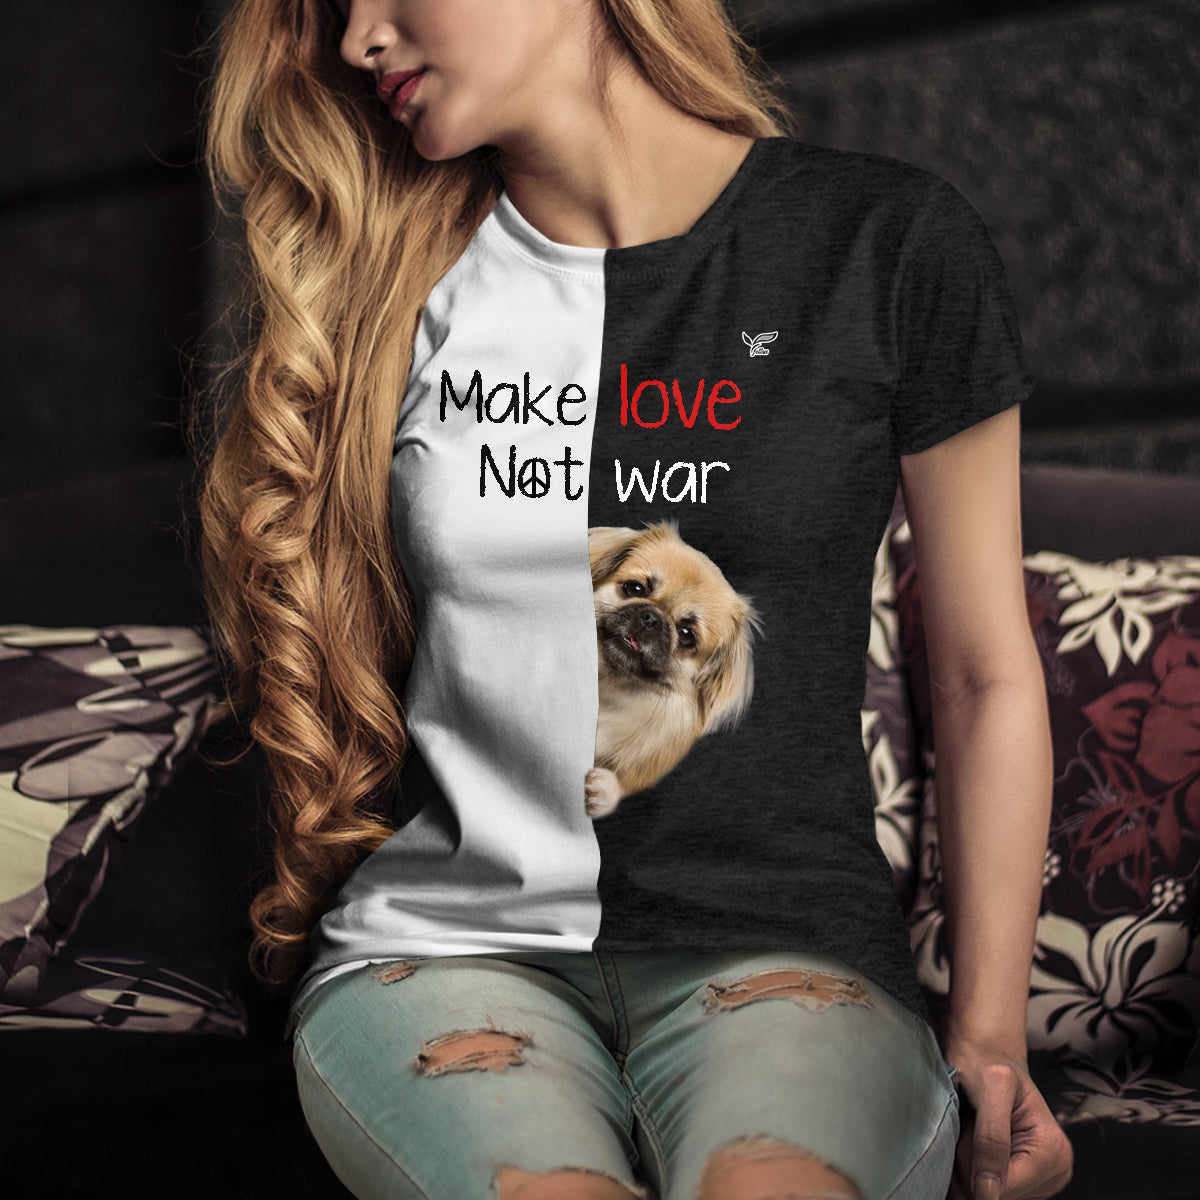 Make Love Not War - Tibetan Spaniel T-Shirt V1